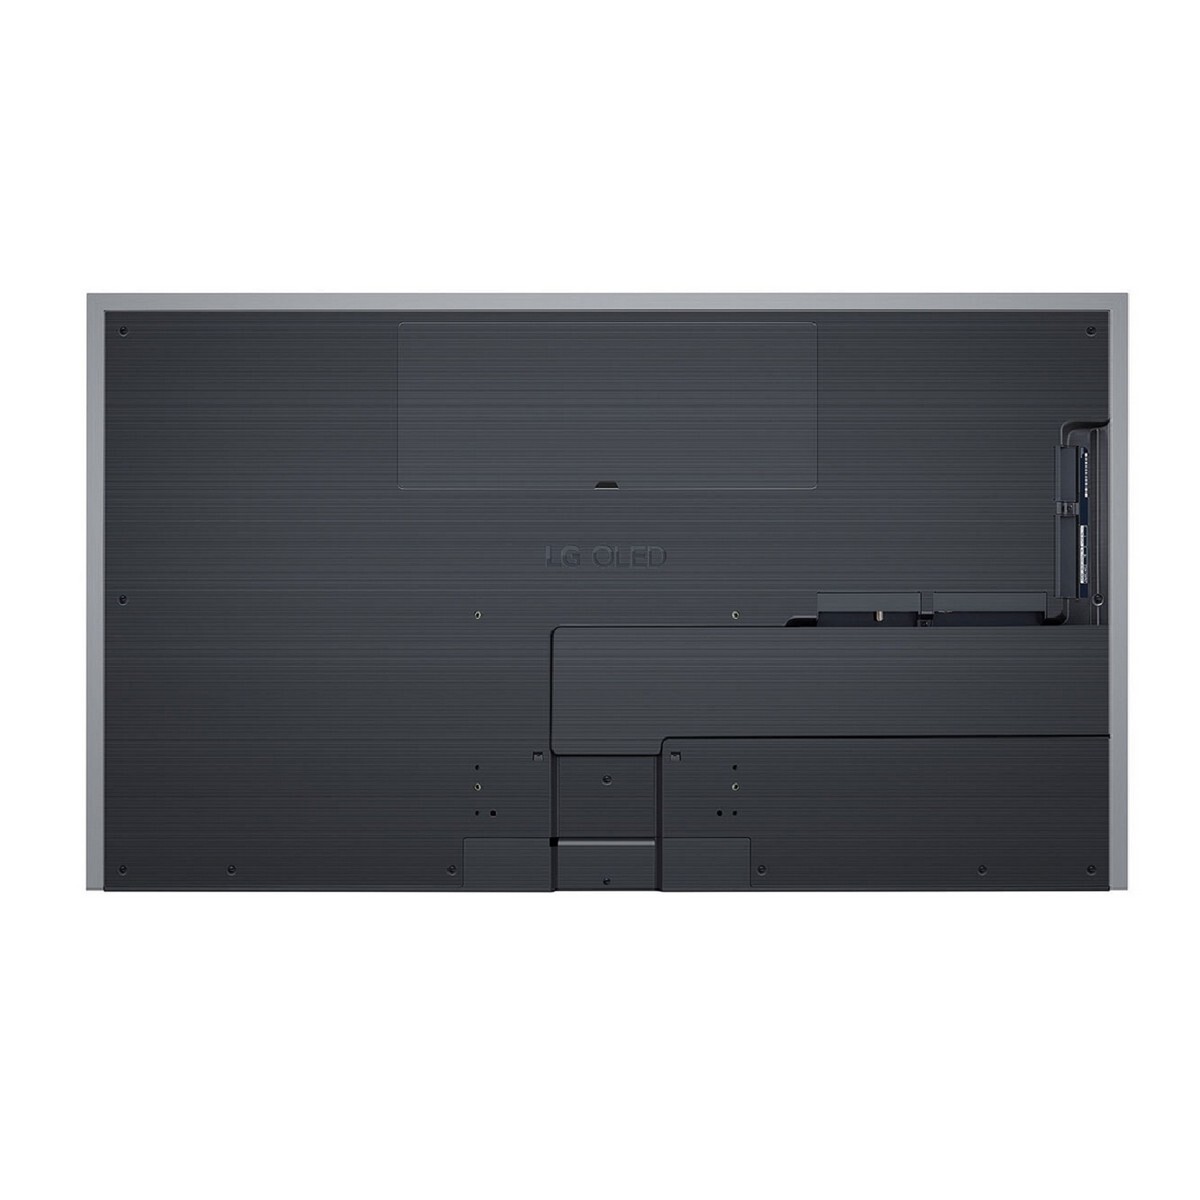 LG OLED evo 4K Ultra HD WebOS Smart TV OLED55G3PSA